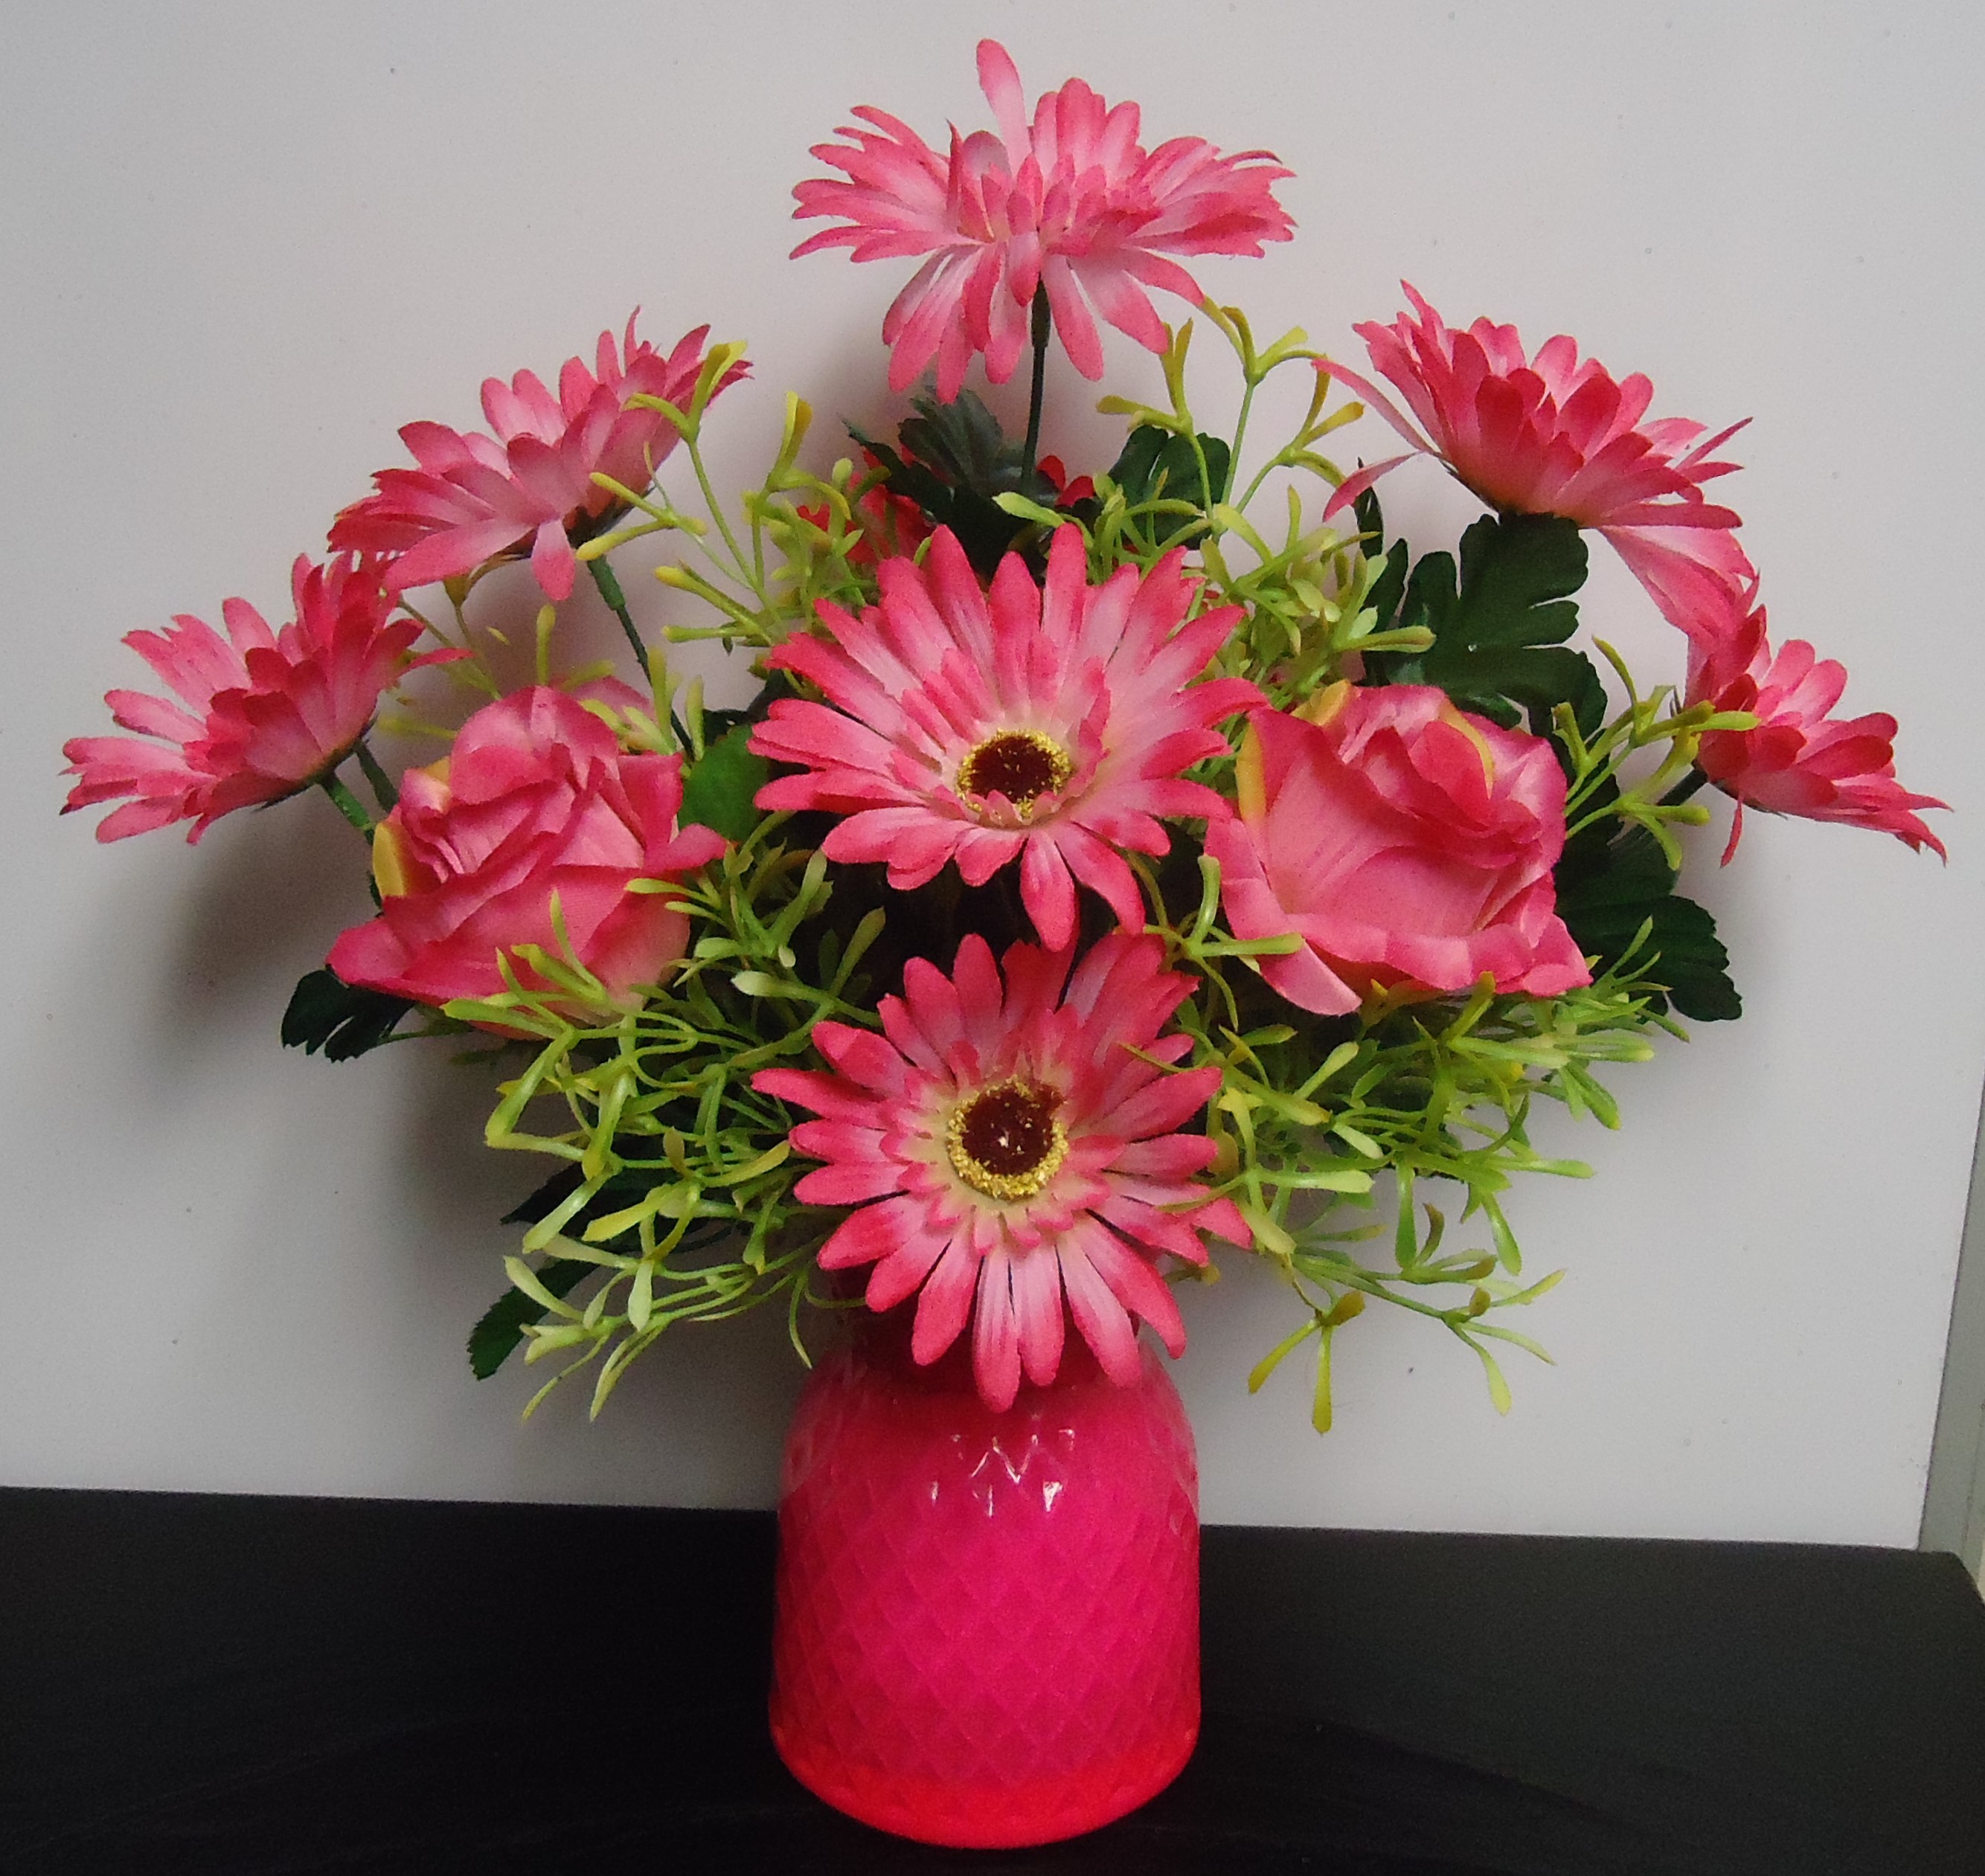 (2) "Silk" Daisy Mix Vase
(Pink & Yellow)
$30.00